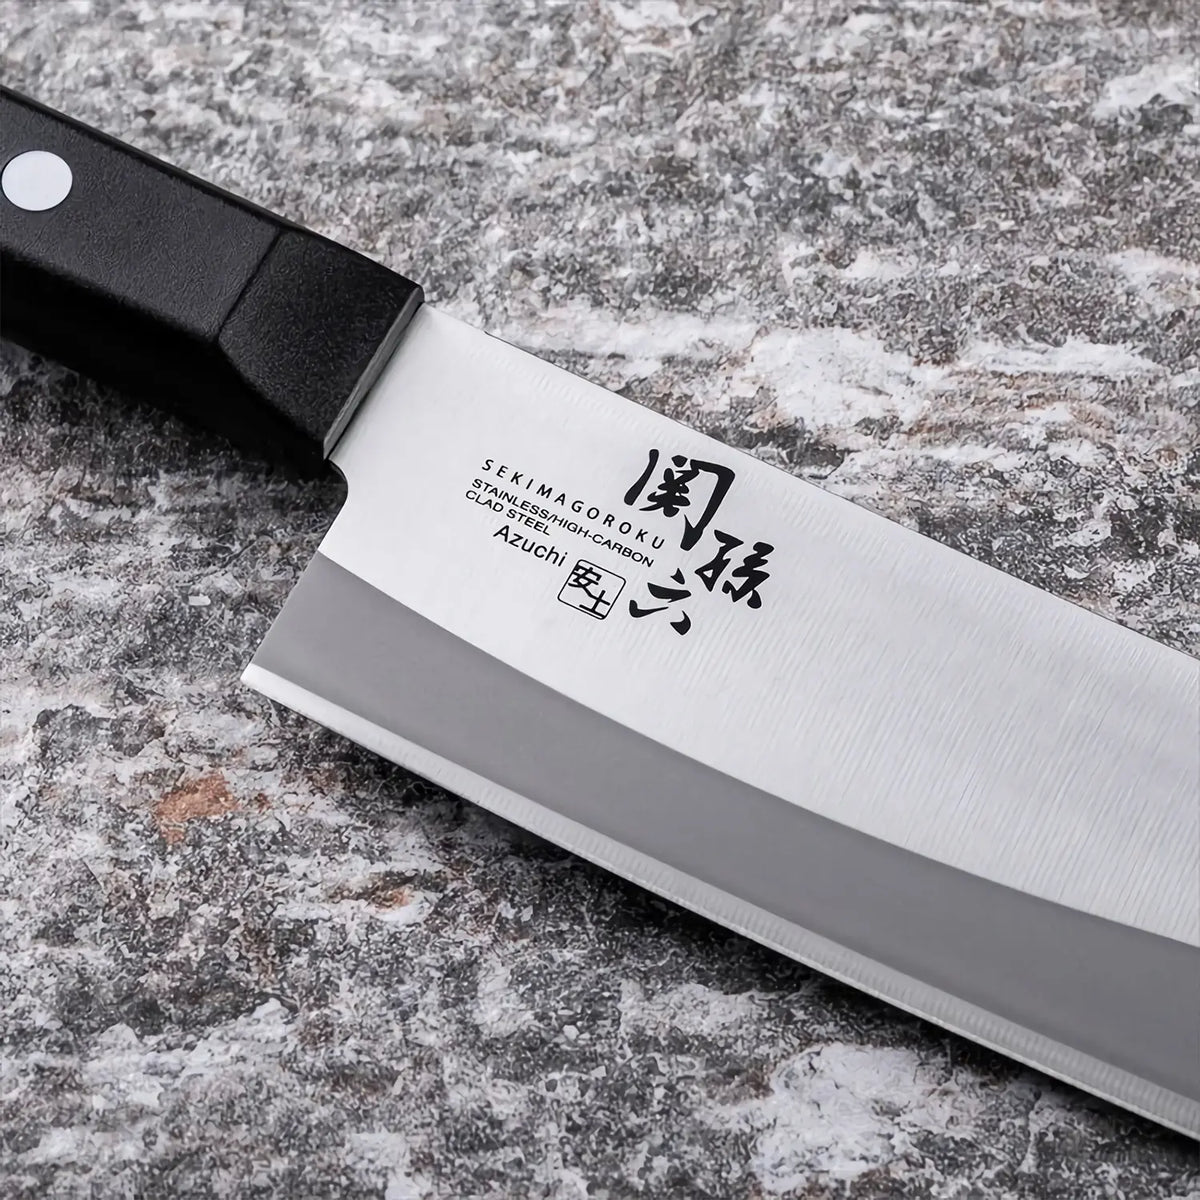 Seki Magoroku Azuchi Stainless Steel Nakiri Knife